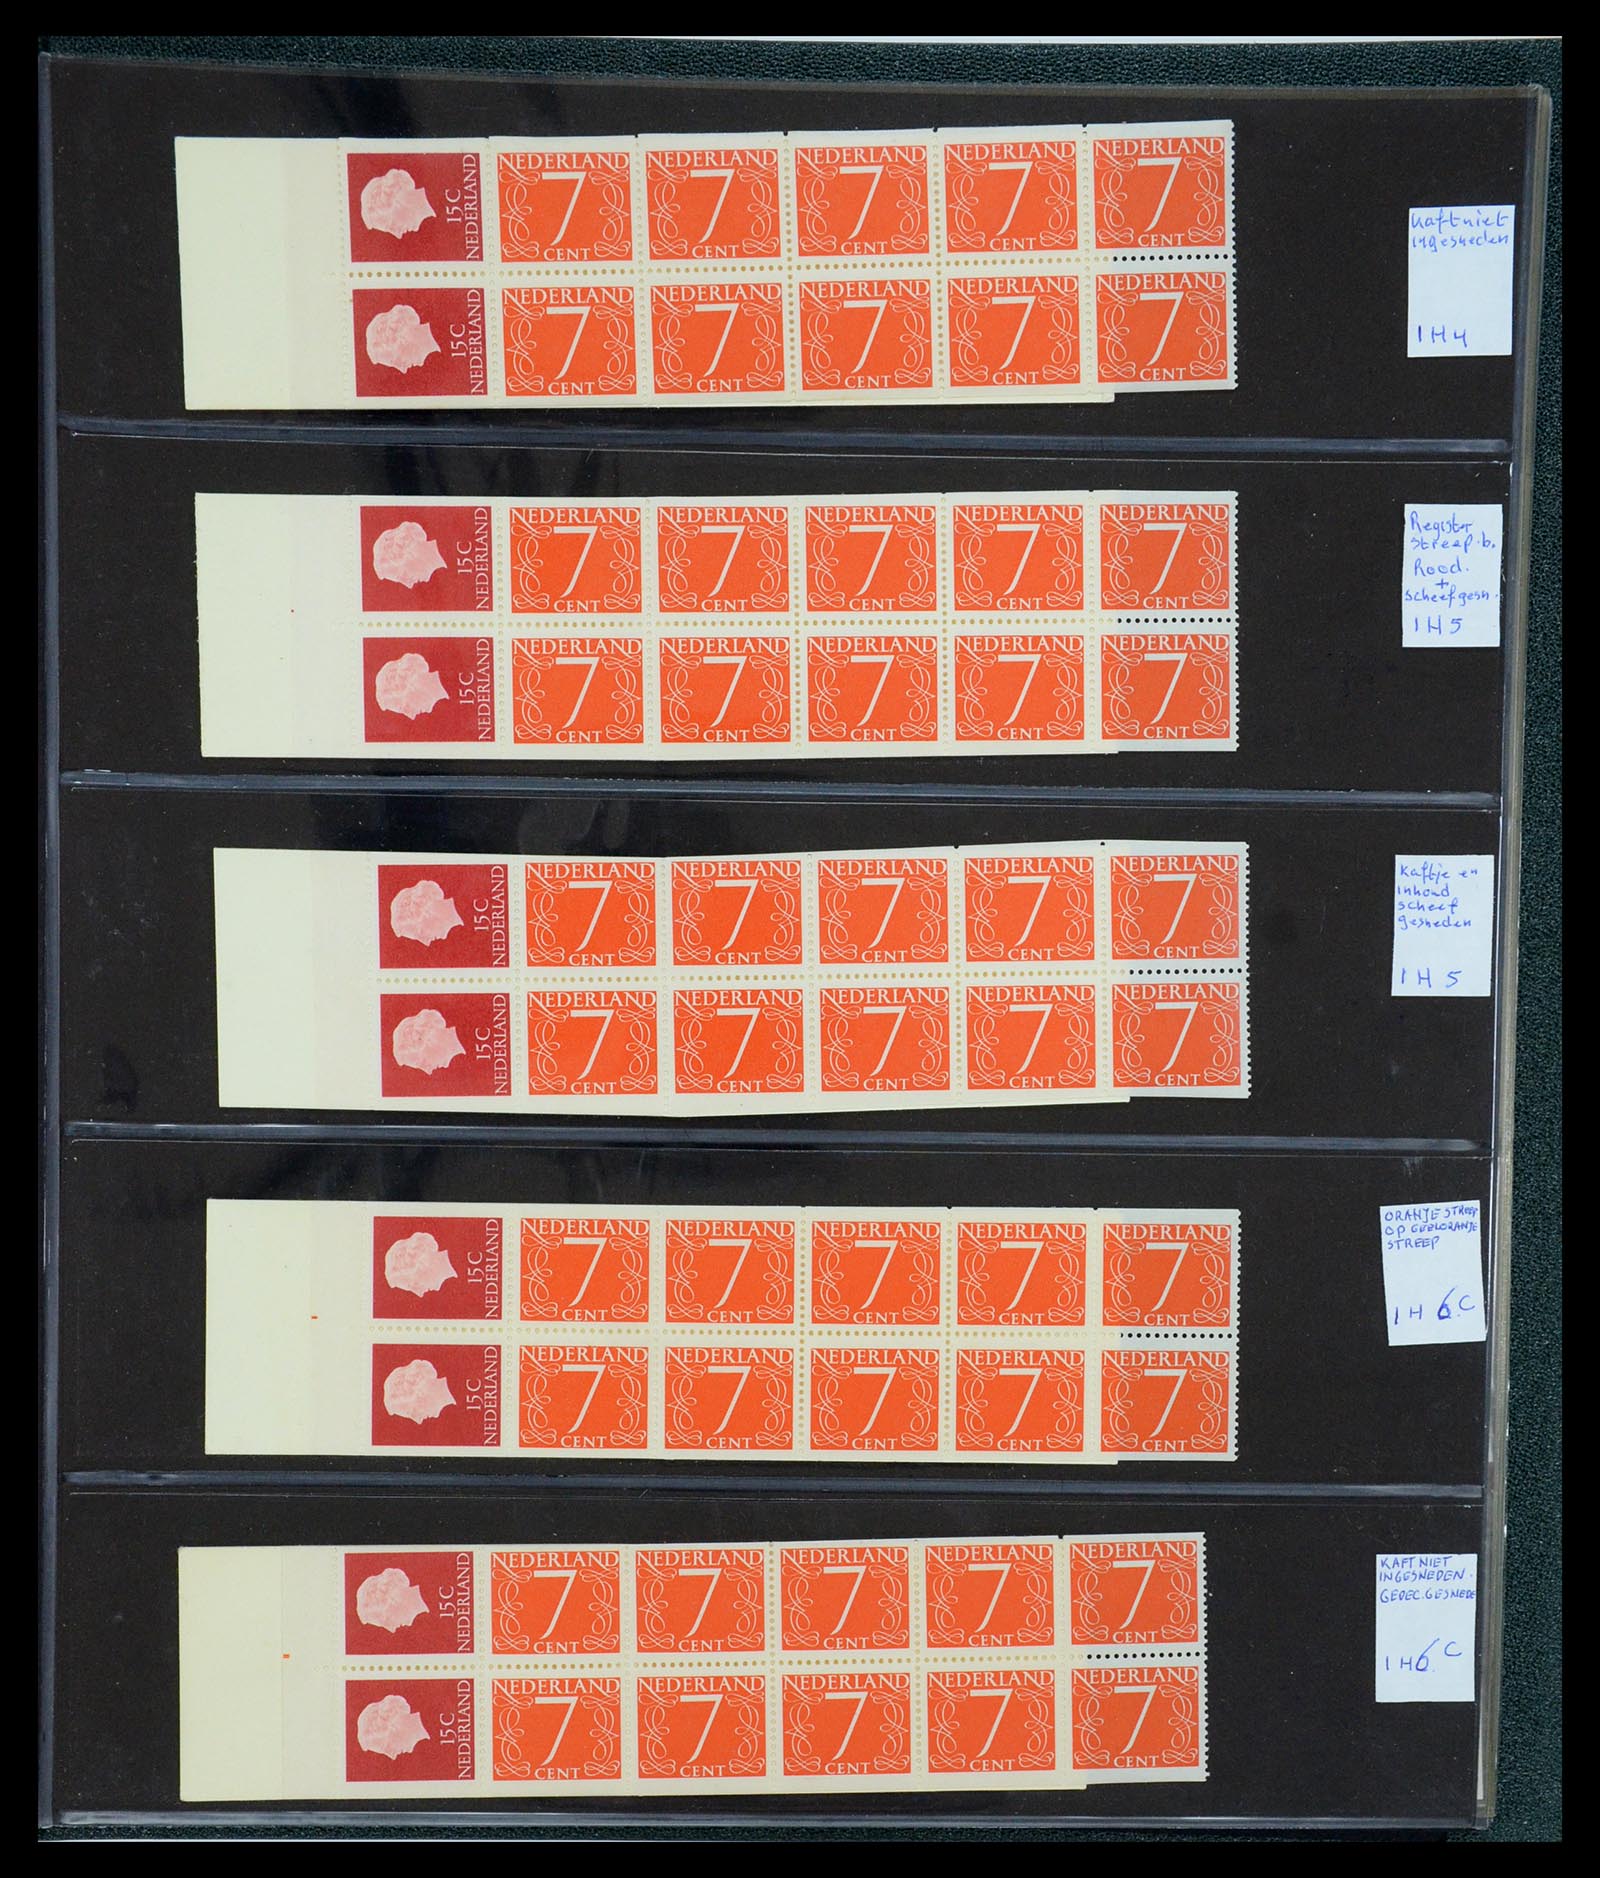 35705 005 - Stamp Collection 35705 Netherlands stamp booklets 1964-2000.